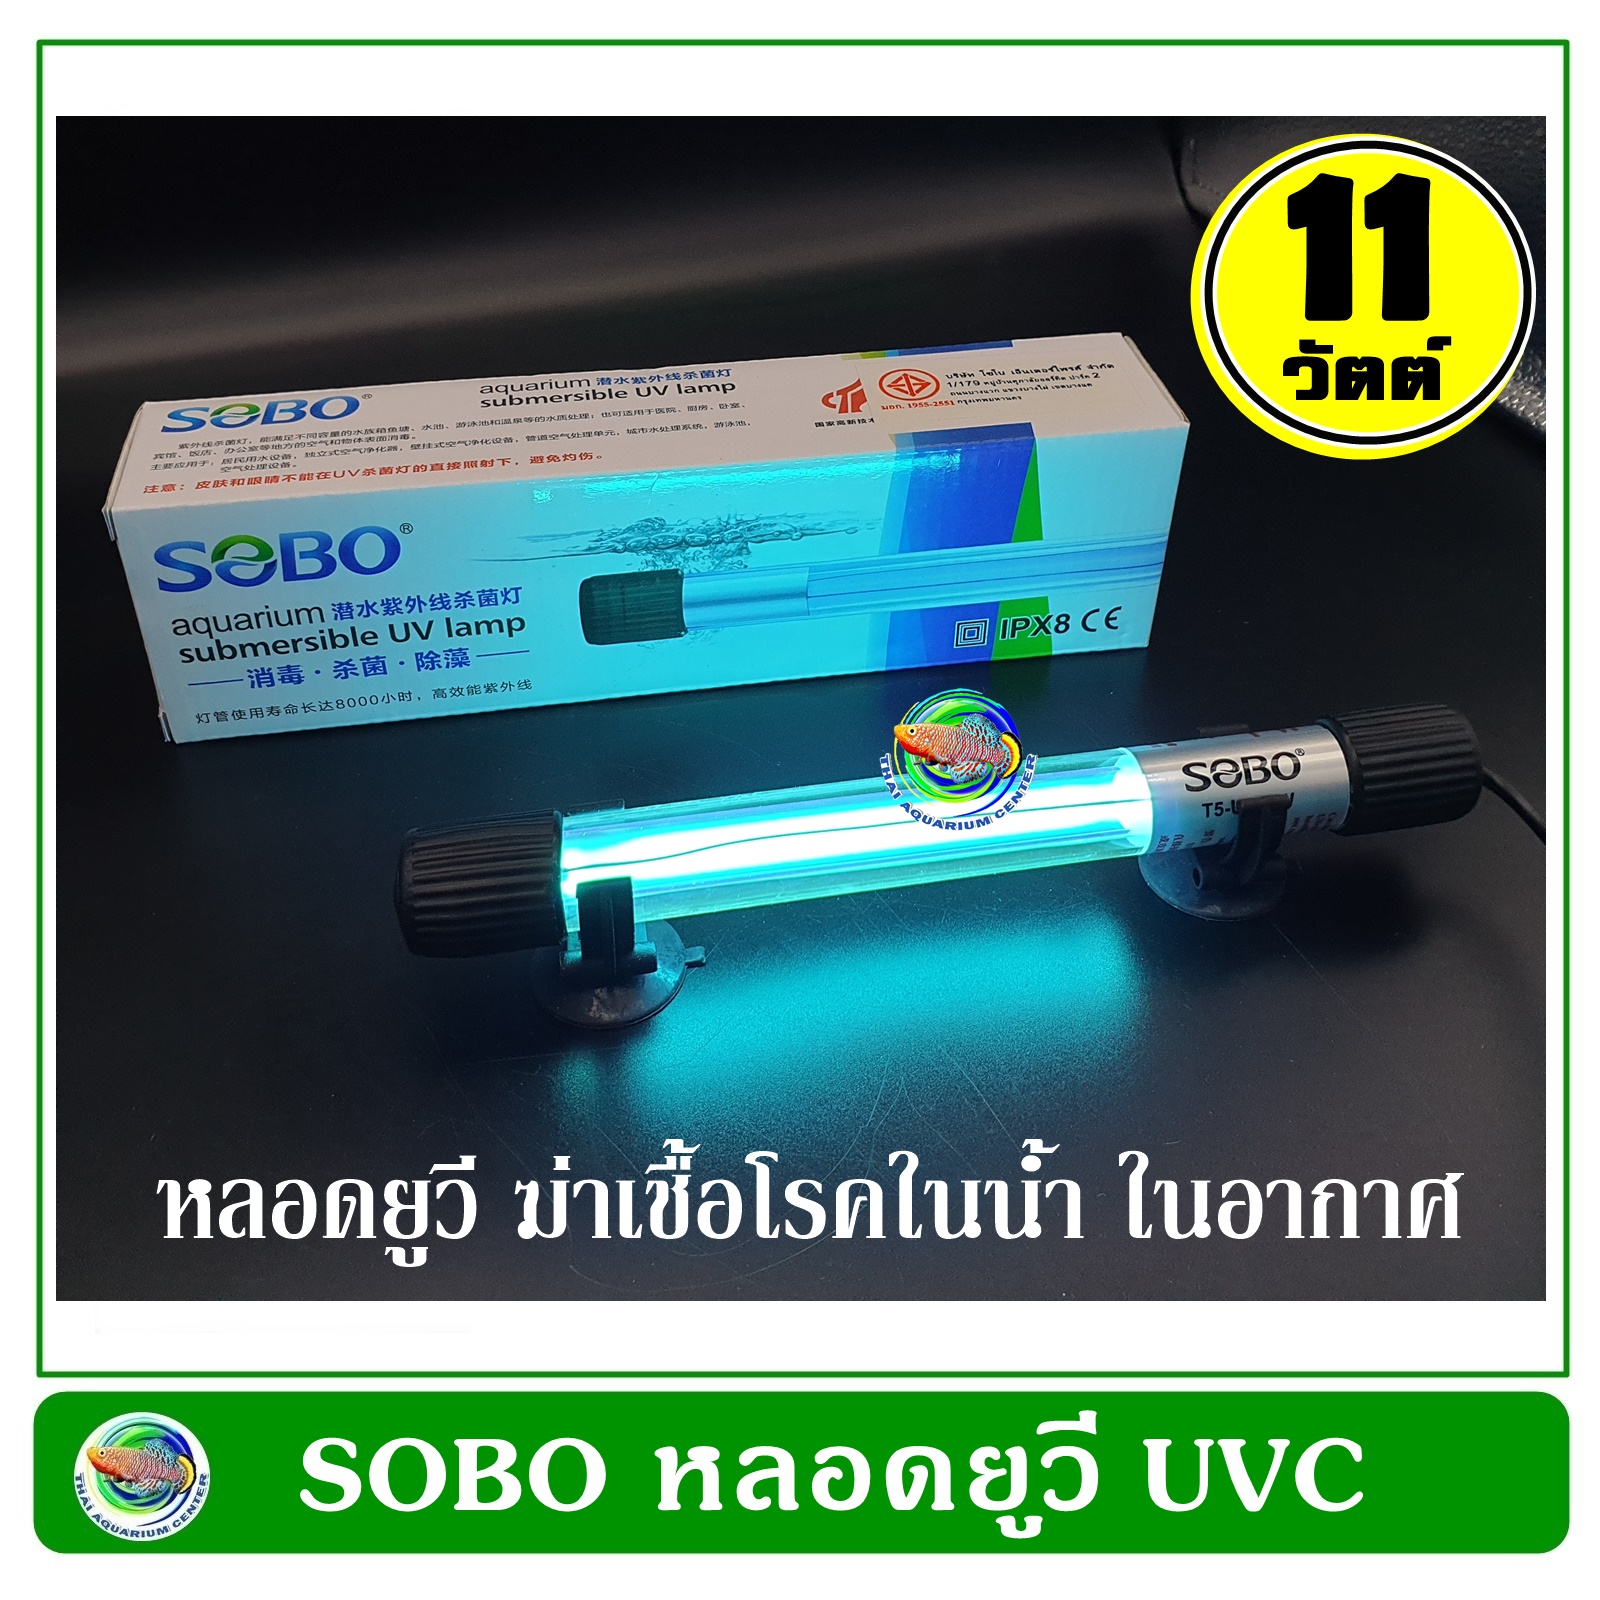 SOBO UV 11W หลอดยูวี ฆ่าเชื้อโรค กำจัดตะไคร่เขียว ขนาด 11 วัตต์ UVC UV Sterilizer